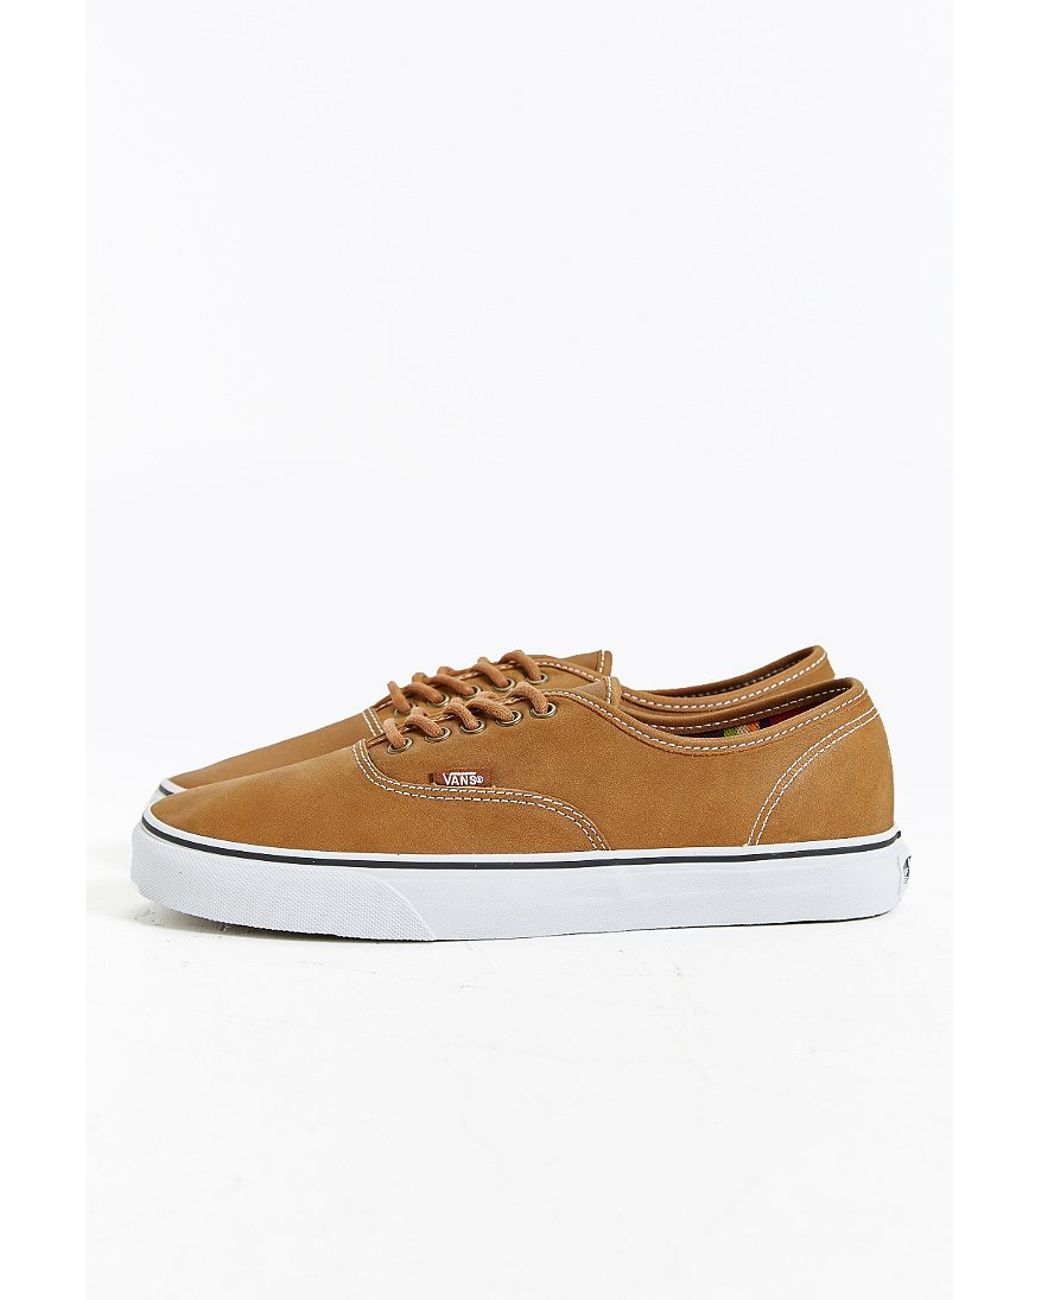 Vans Authentic Leather Sneaker in Tan (Brown) for Men | Lyst